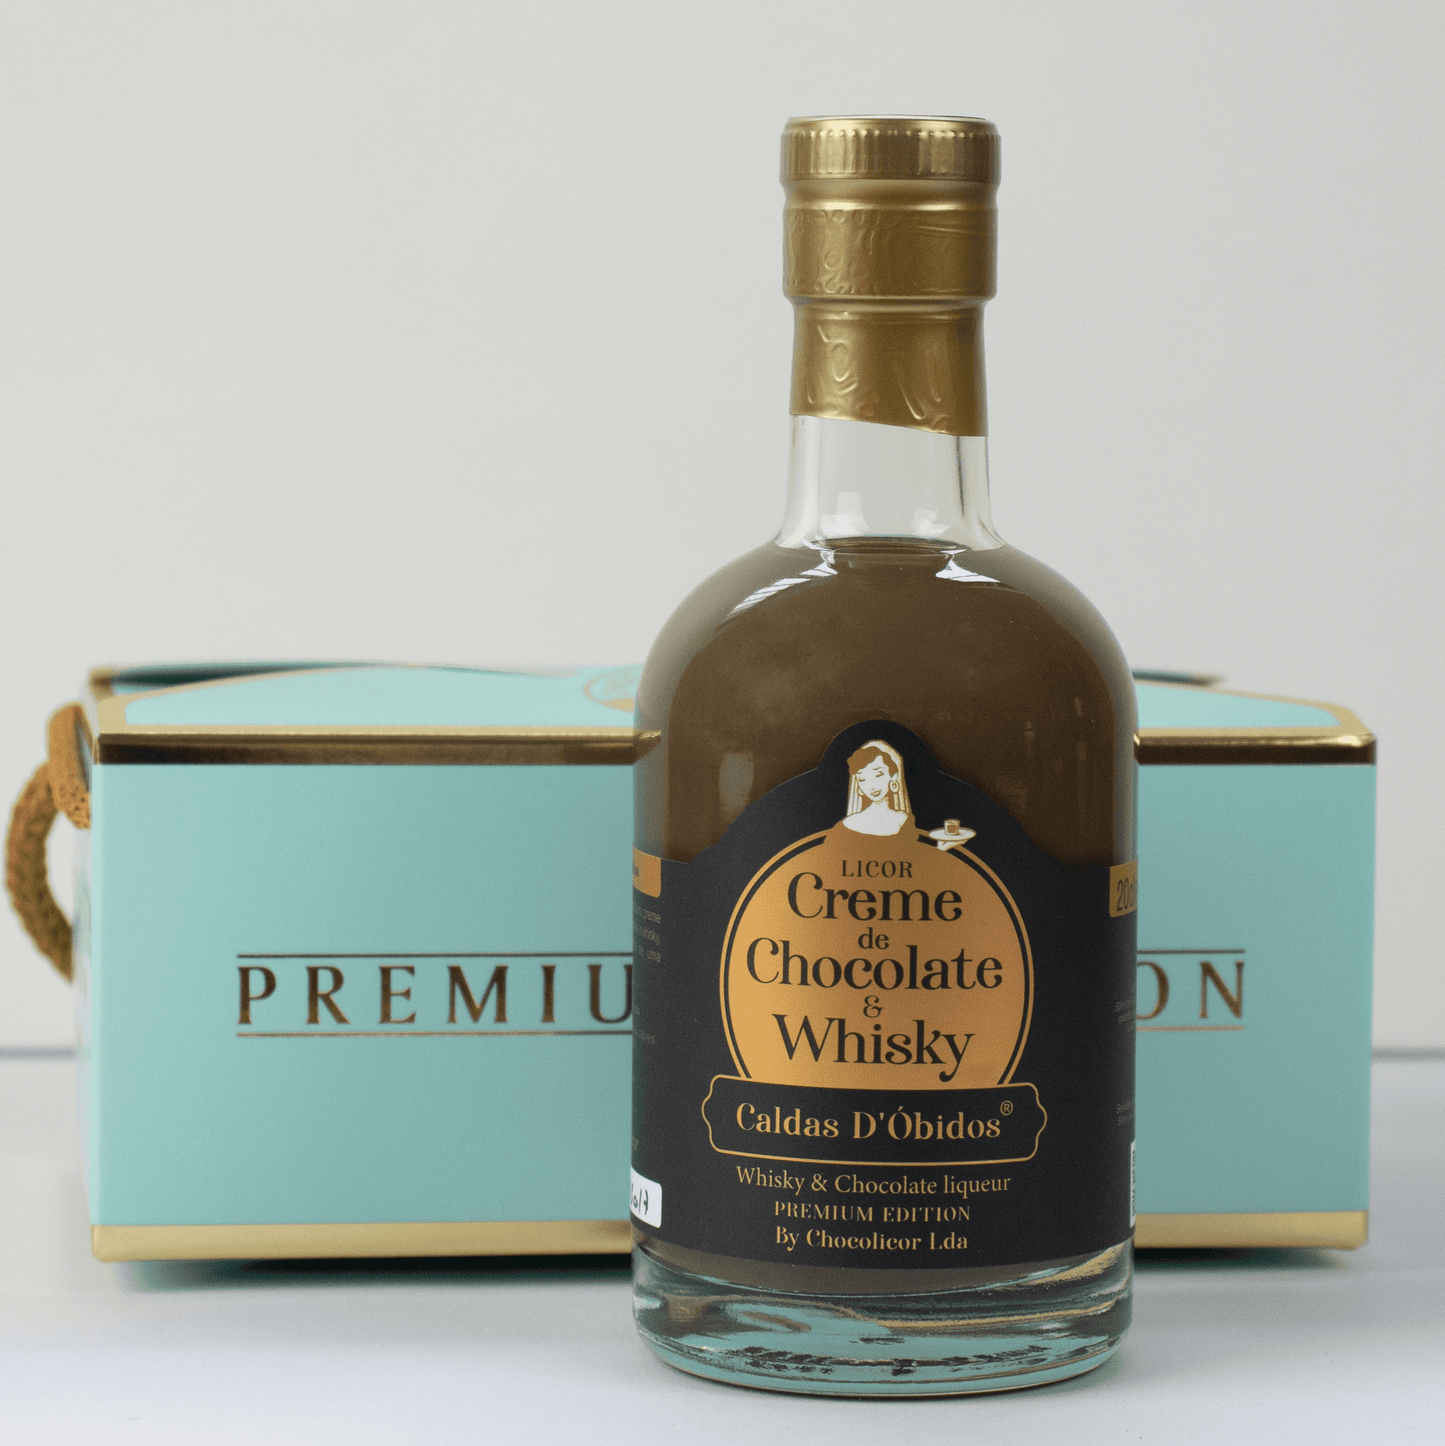 Licor de Chocolate y Whisky Premium